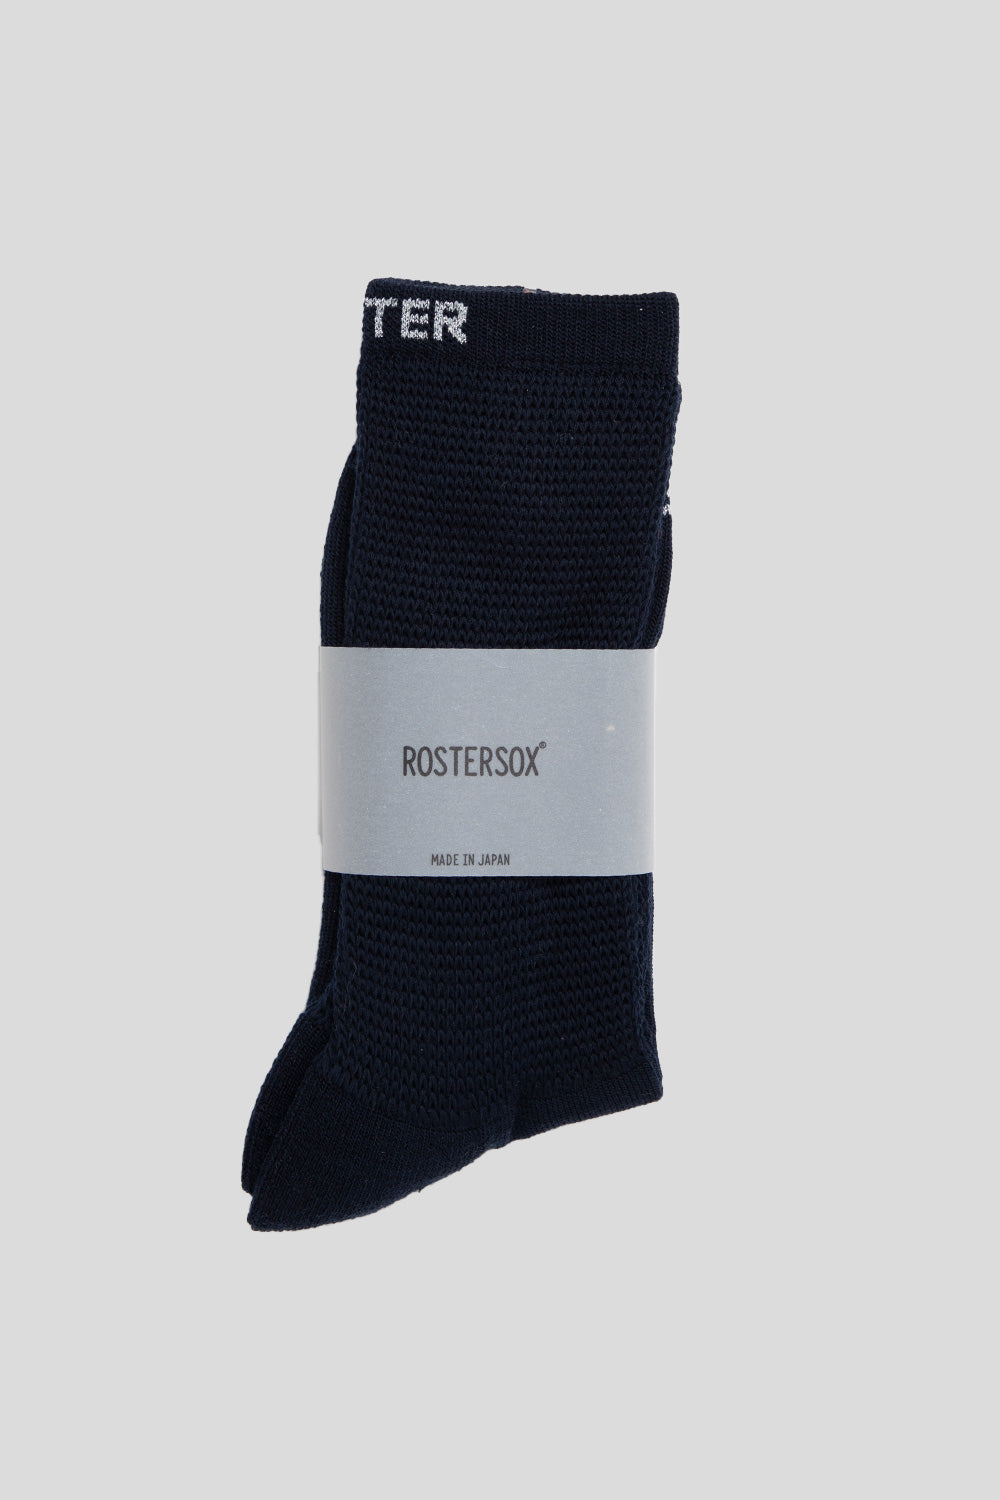 Rostersox Merino Wool Pile Socks in Navy